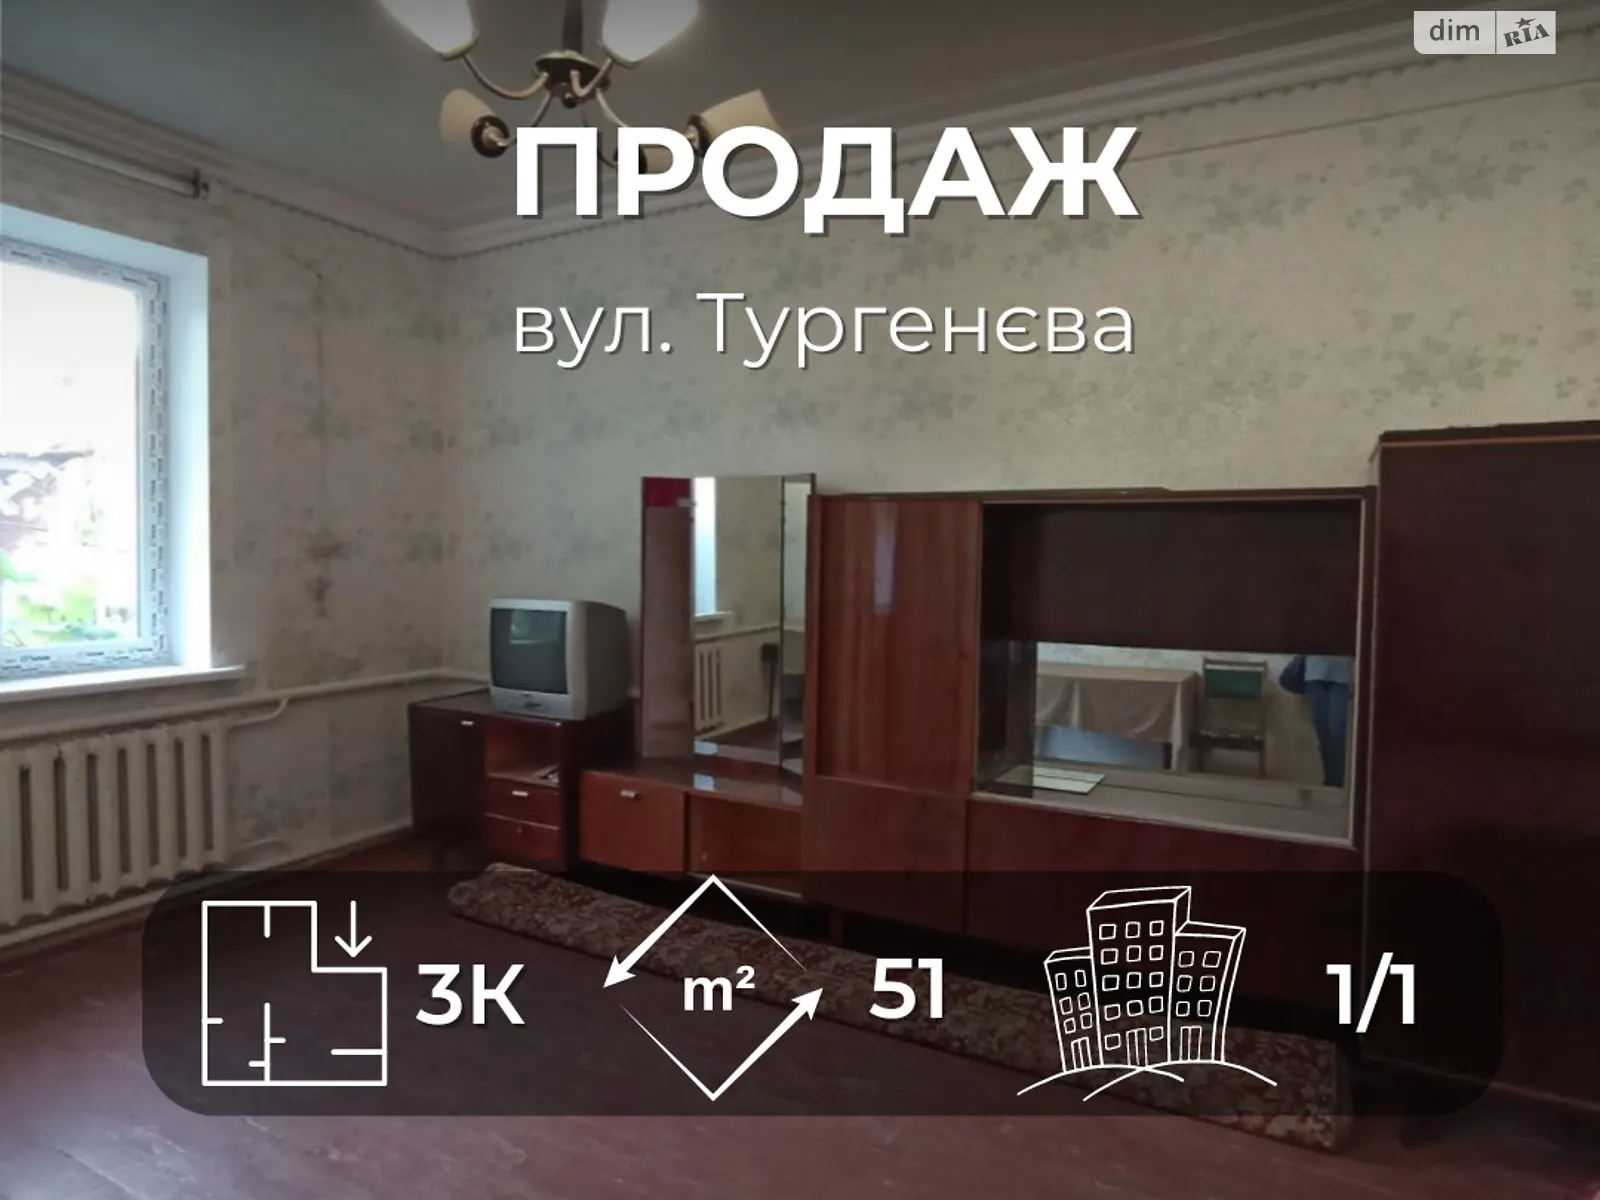 Продается 3-комнатная квартира 51 кв. м в Чернигове, цена: 18000 $